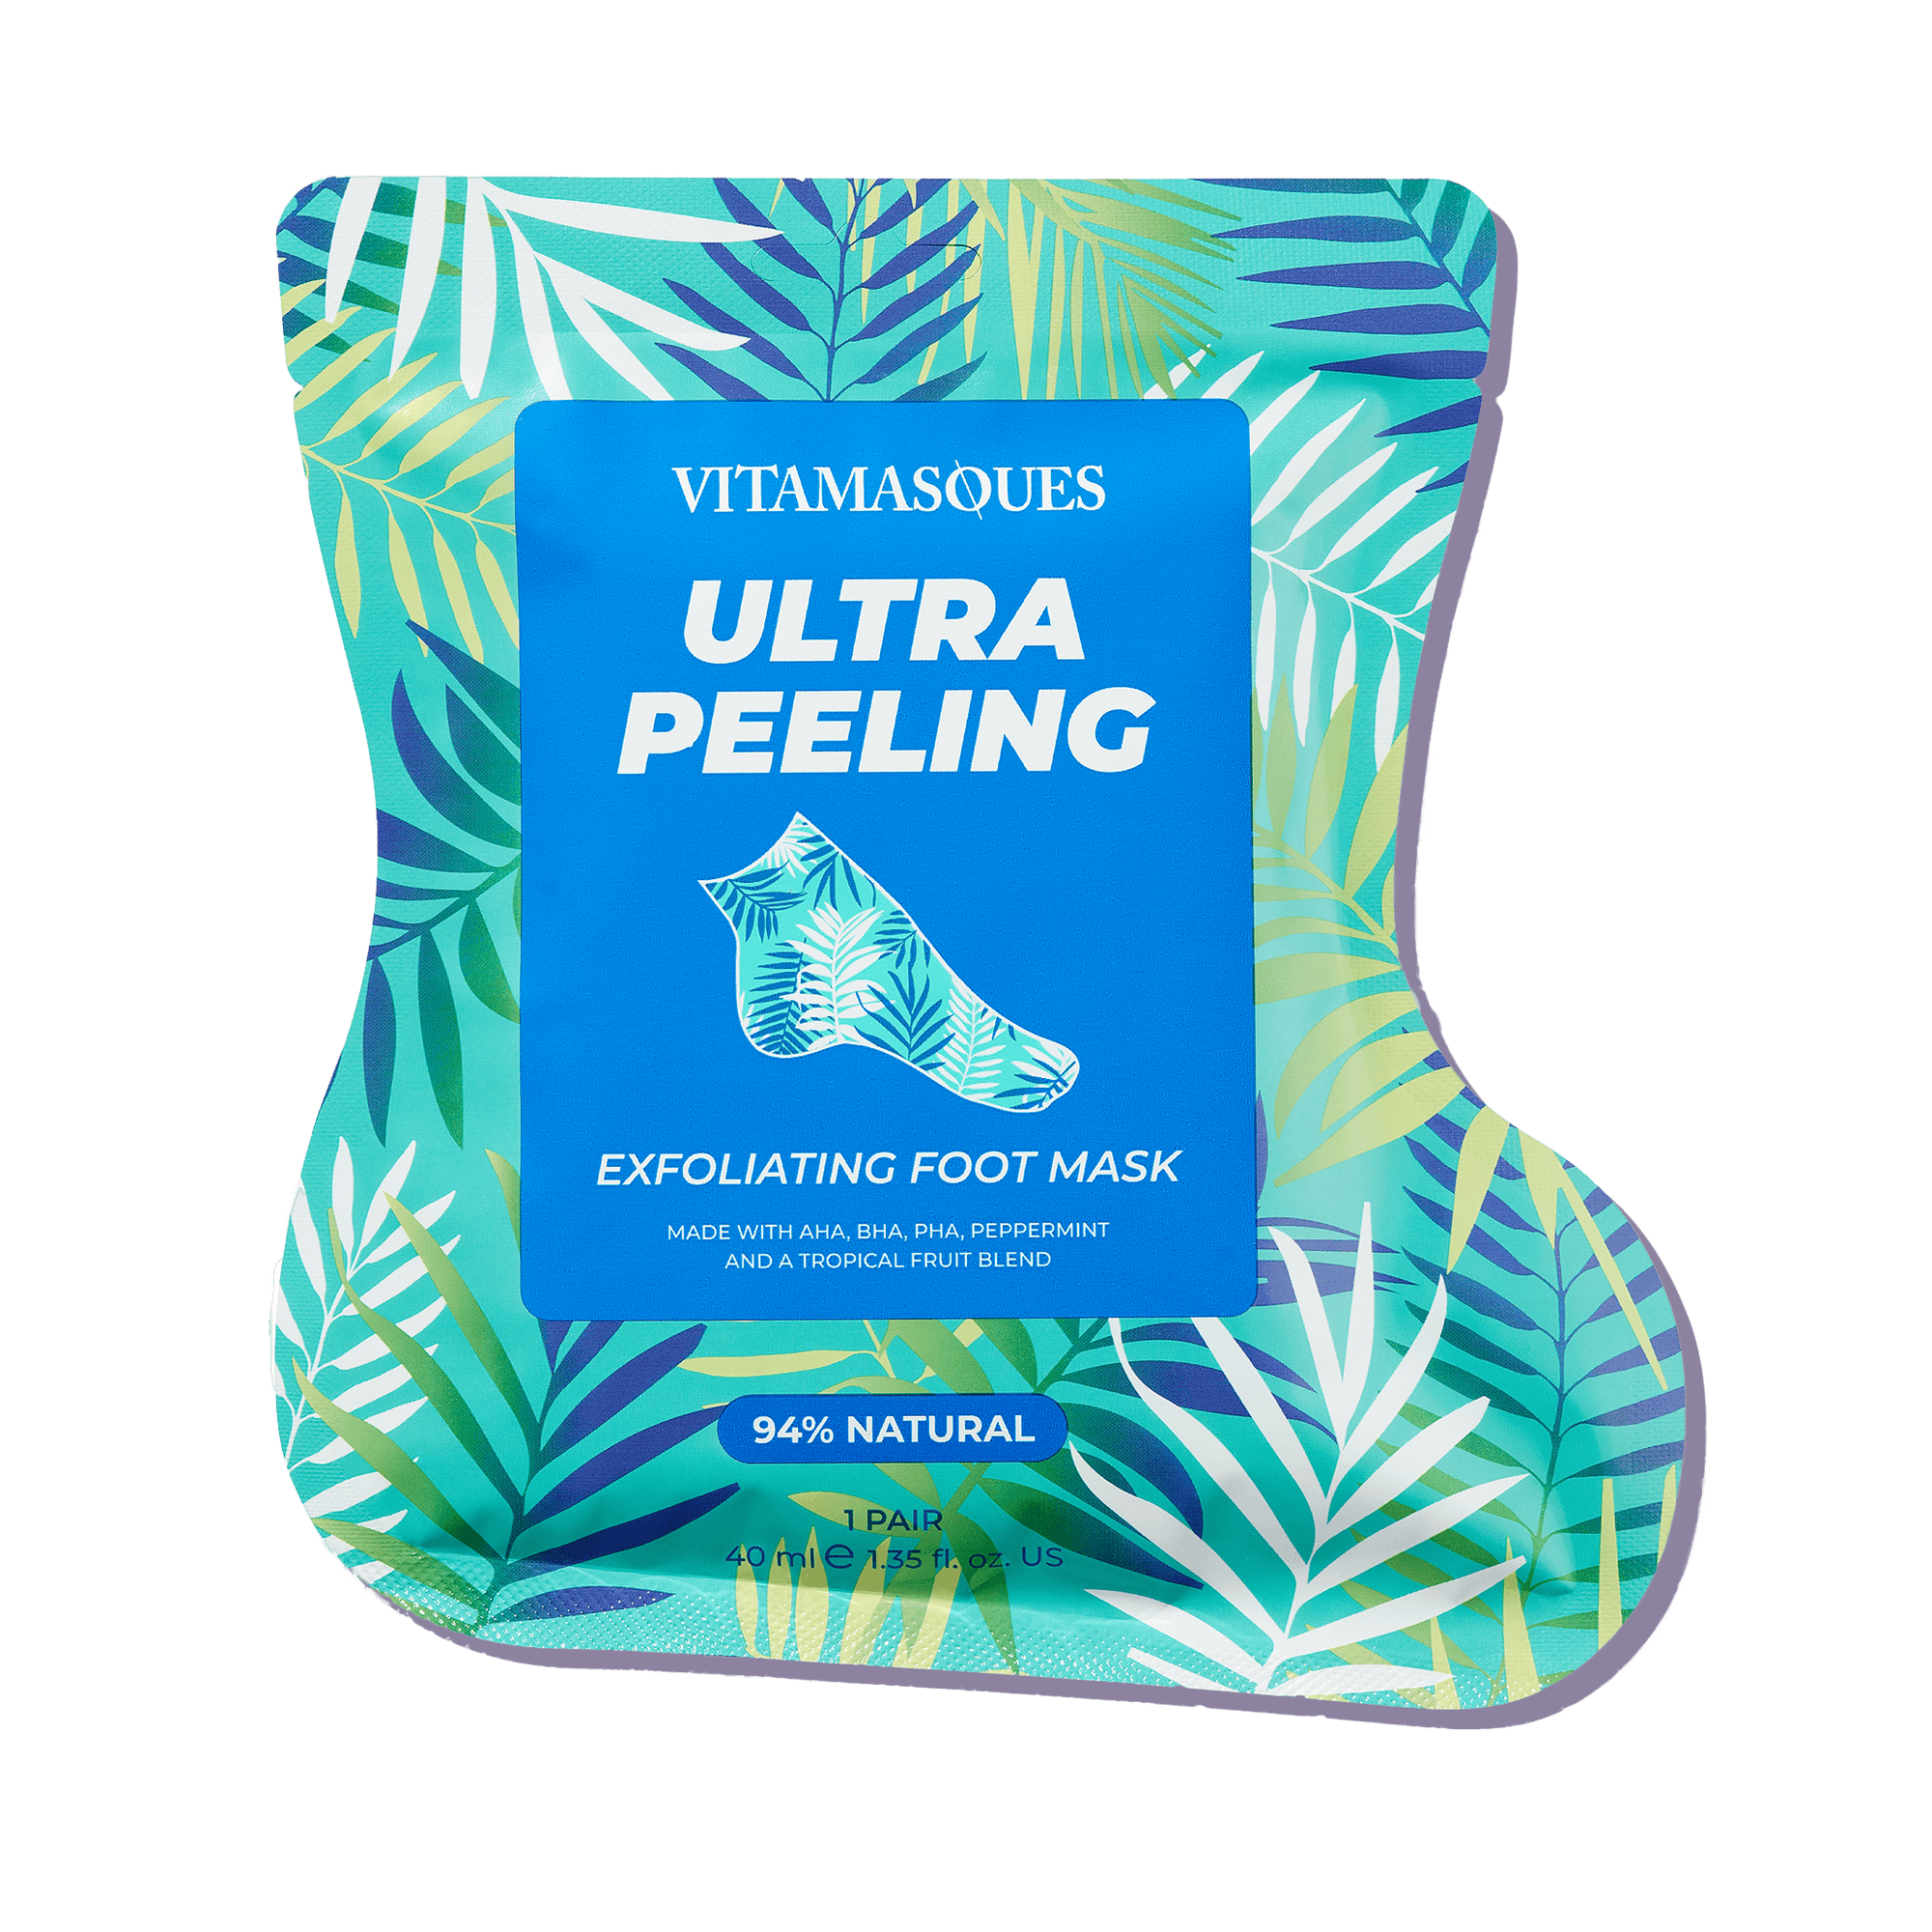 Ultra Peeling Exfoliating Foot Mask - Vitamasques